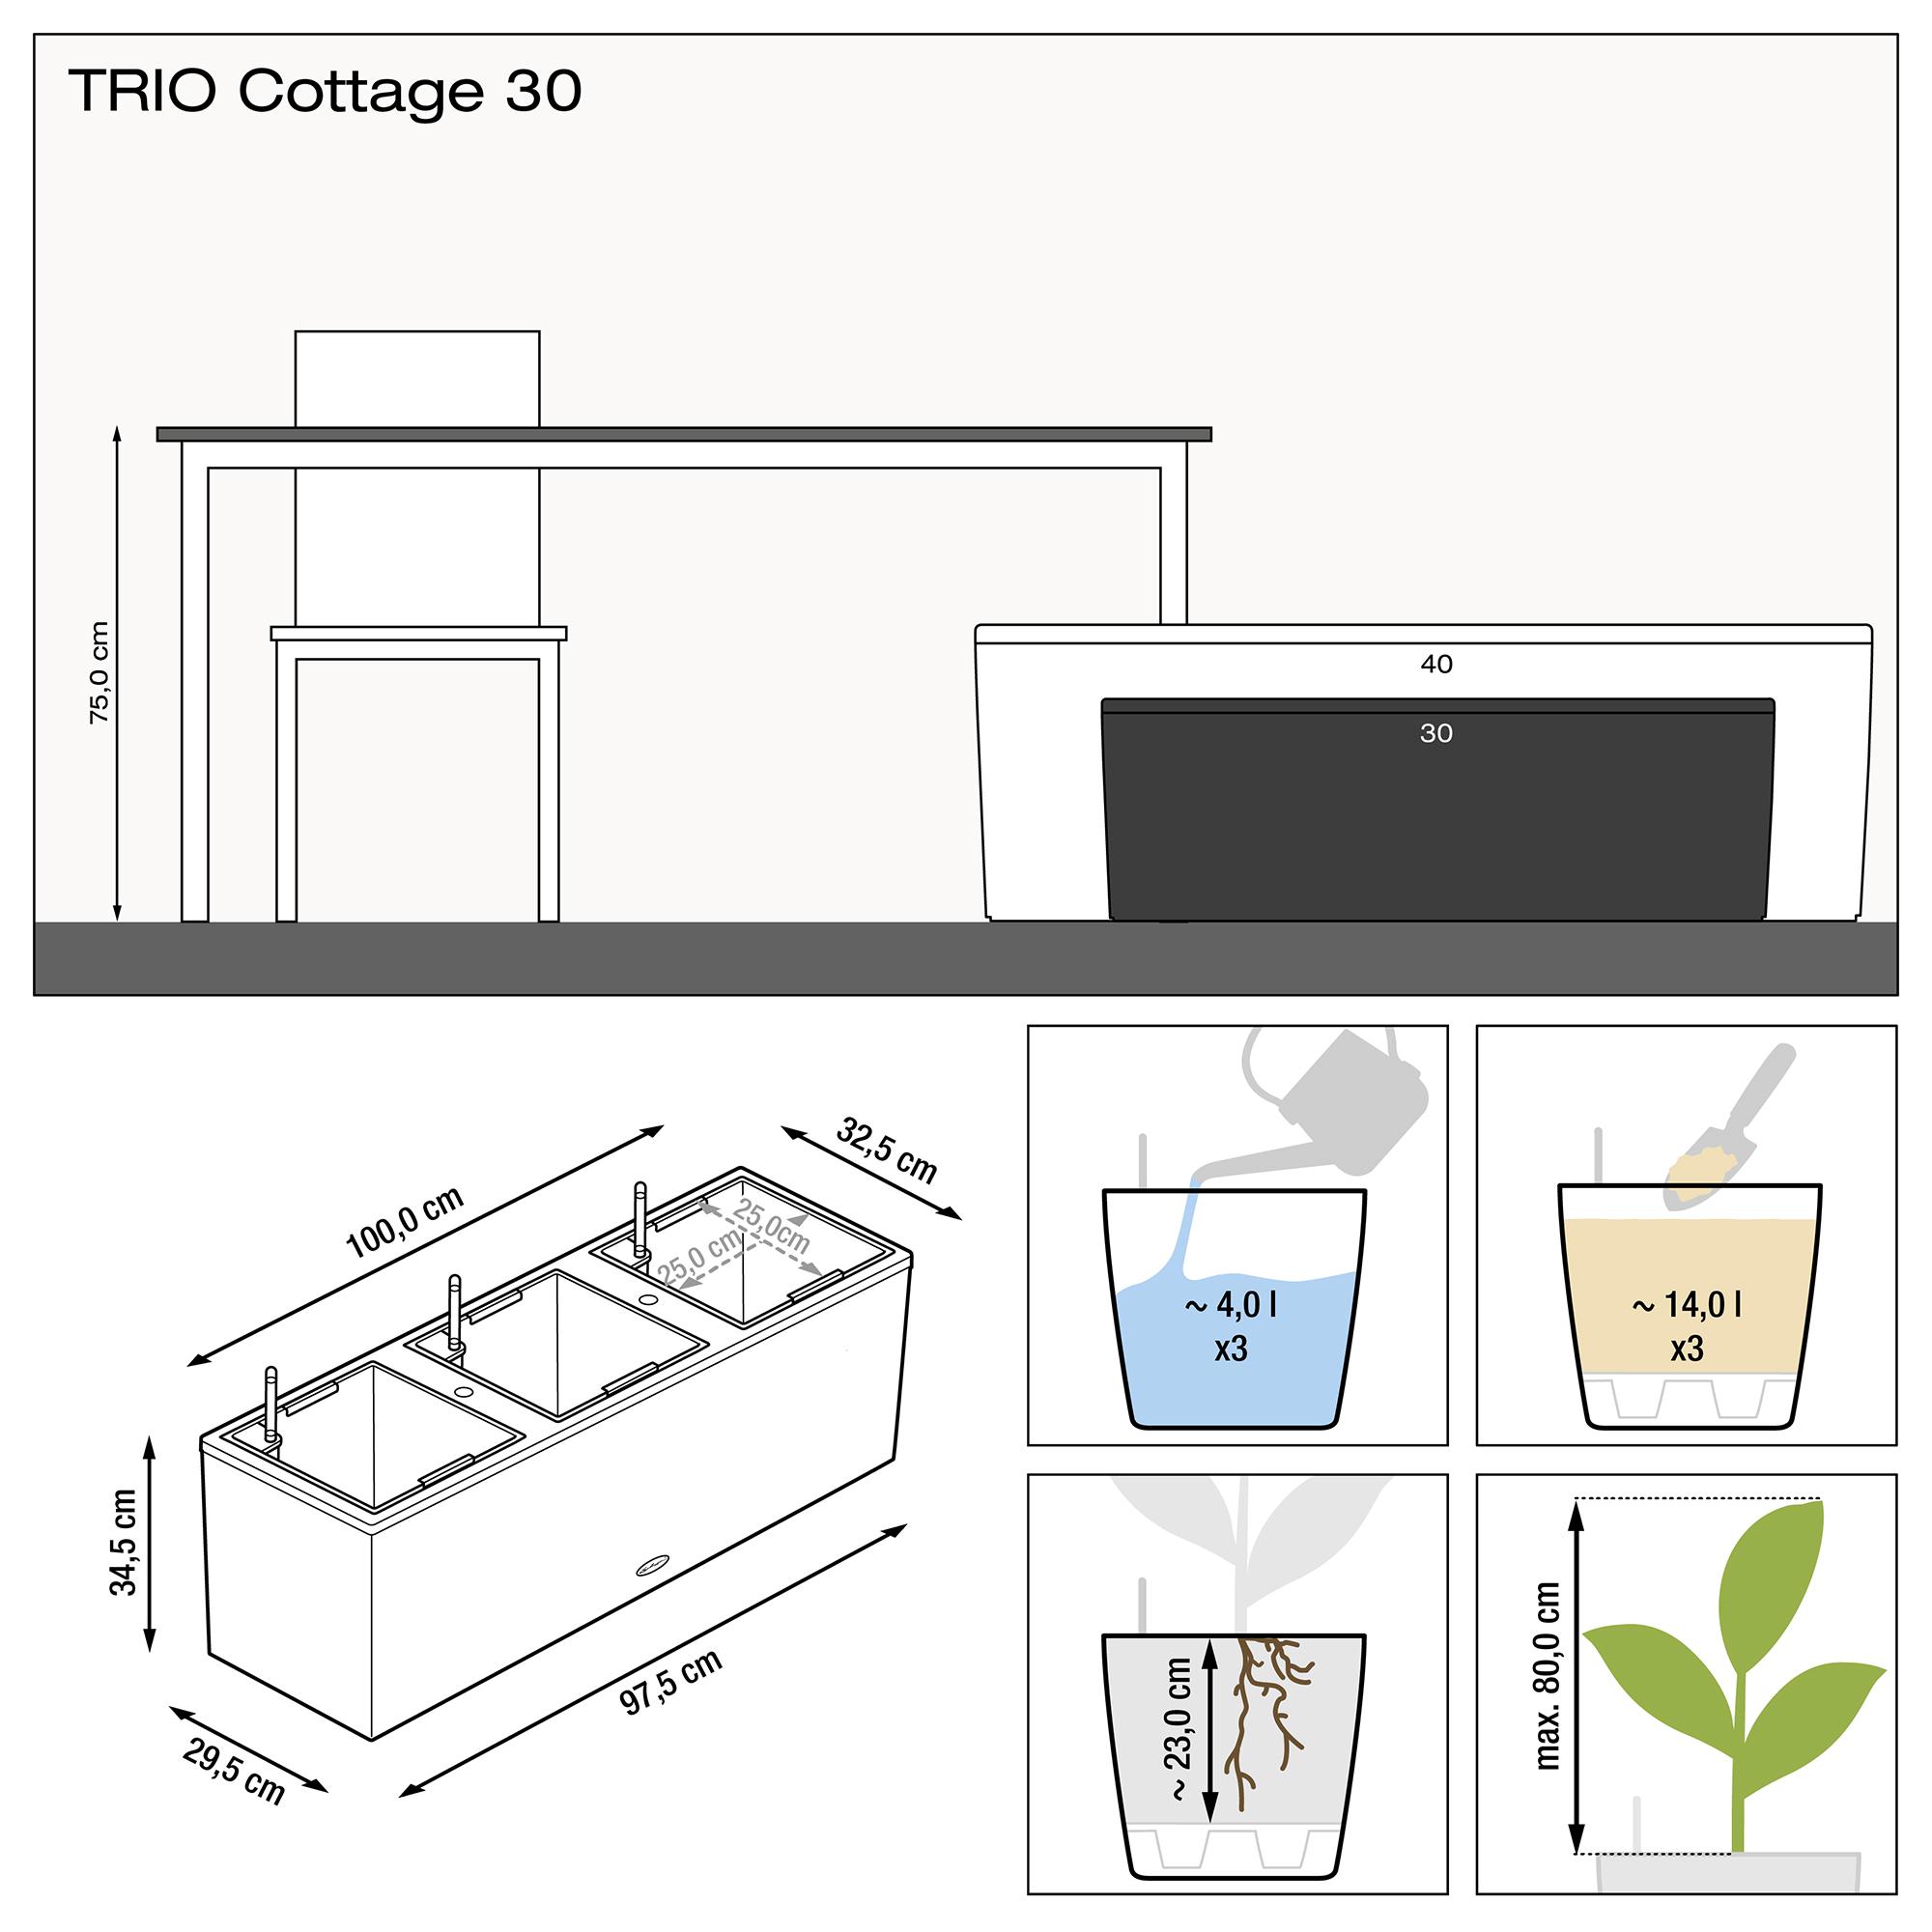 le_trio-cottage30_product_addi_nz Thumb